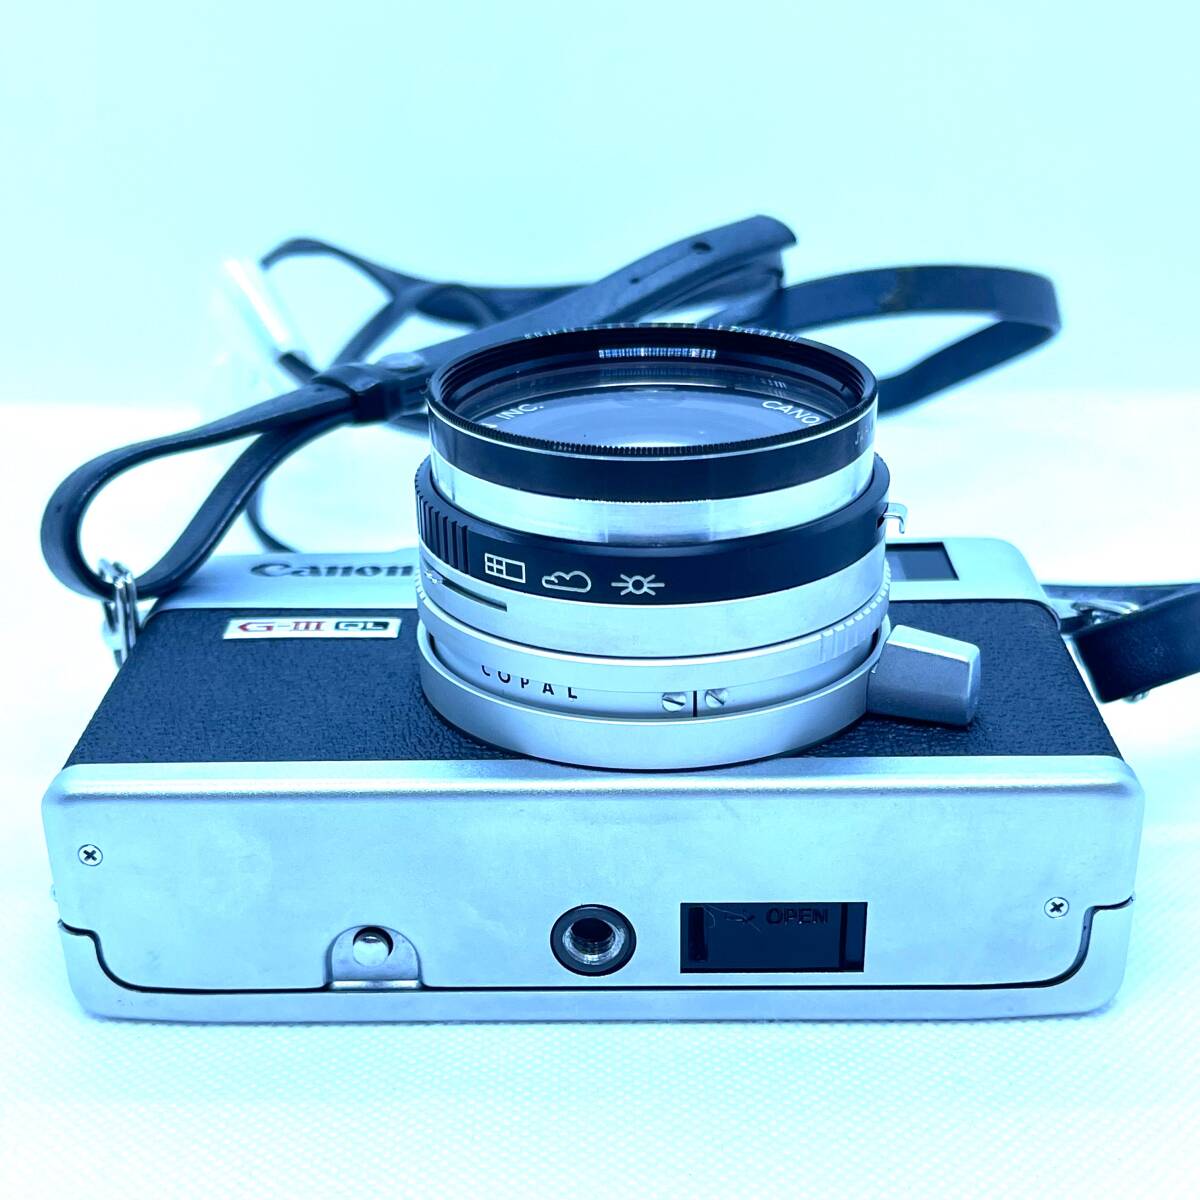 1 jpy start Canon Canonet QL17 GⅢ F1.7 40. compact film camera operation not yet verification /3424